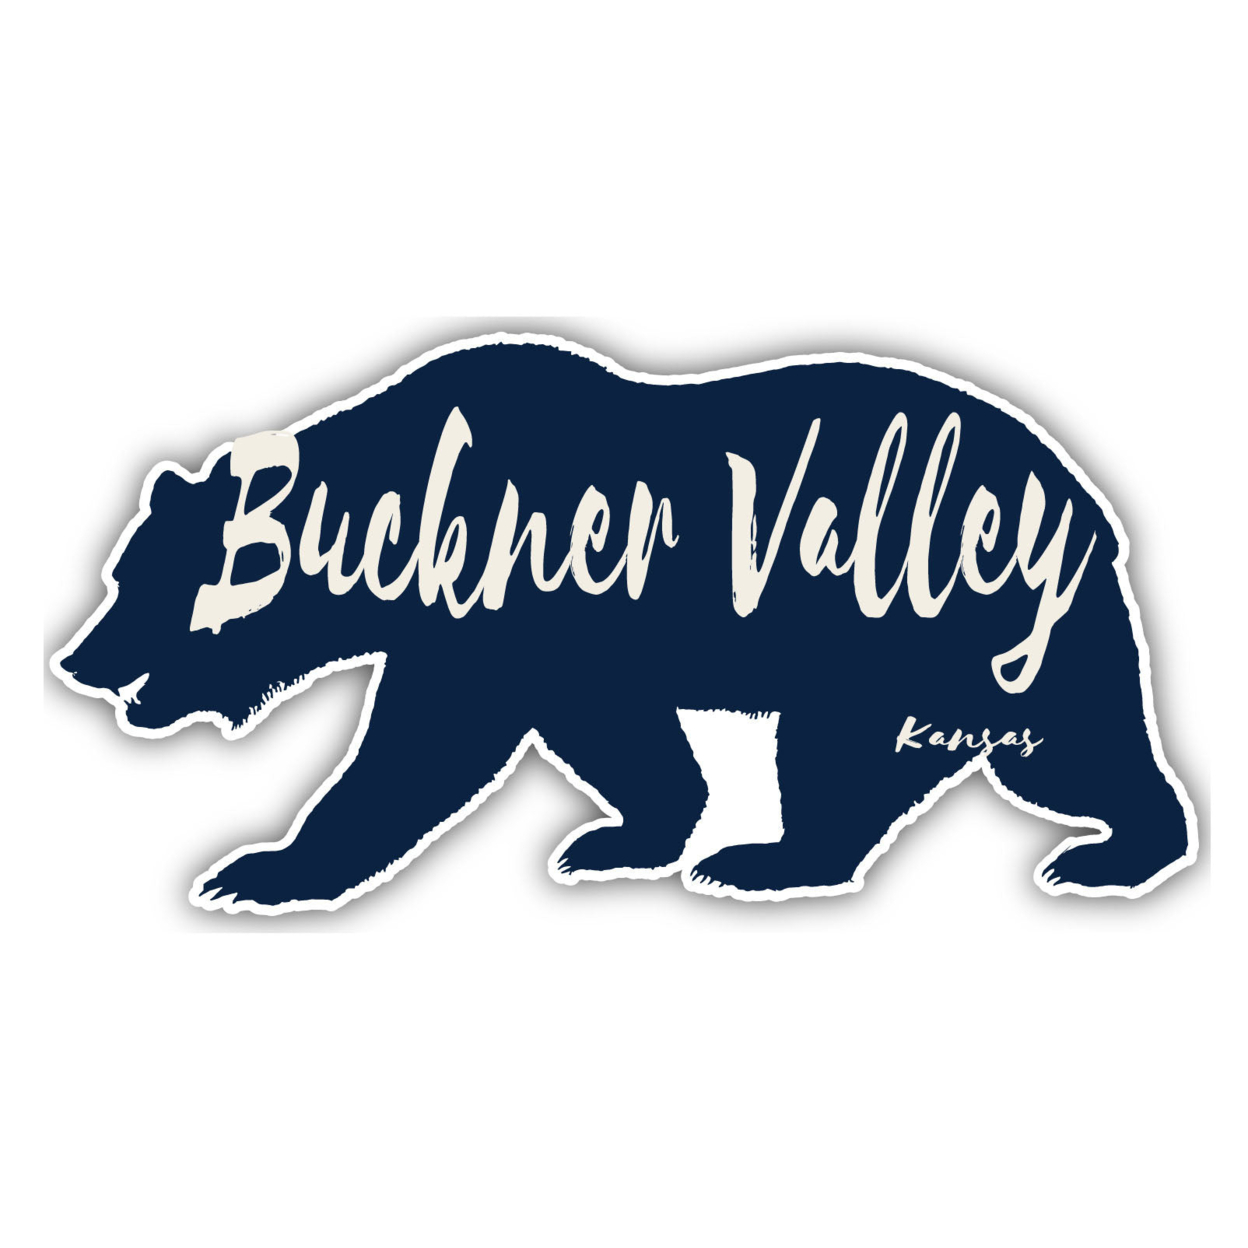 Buckner Valley Kansas Souvenir Decorative Stickers (Choose Theme And Size) - Single Unit, 4-Inch, Bear